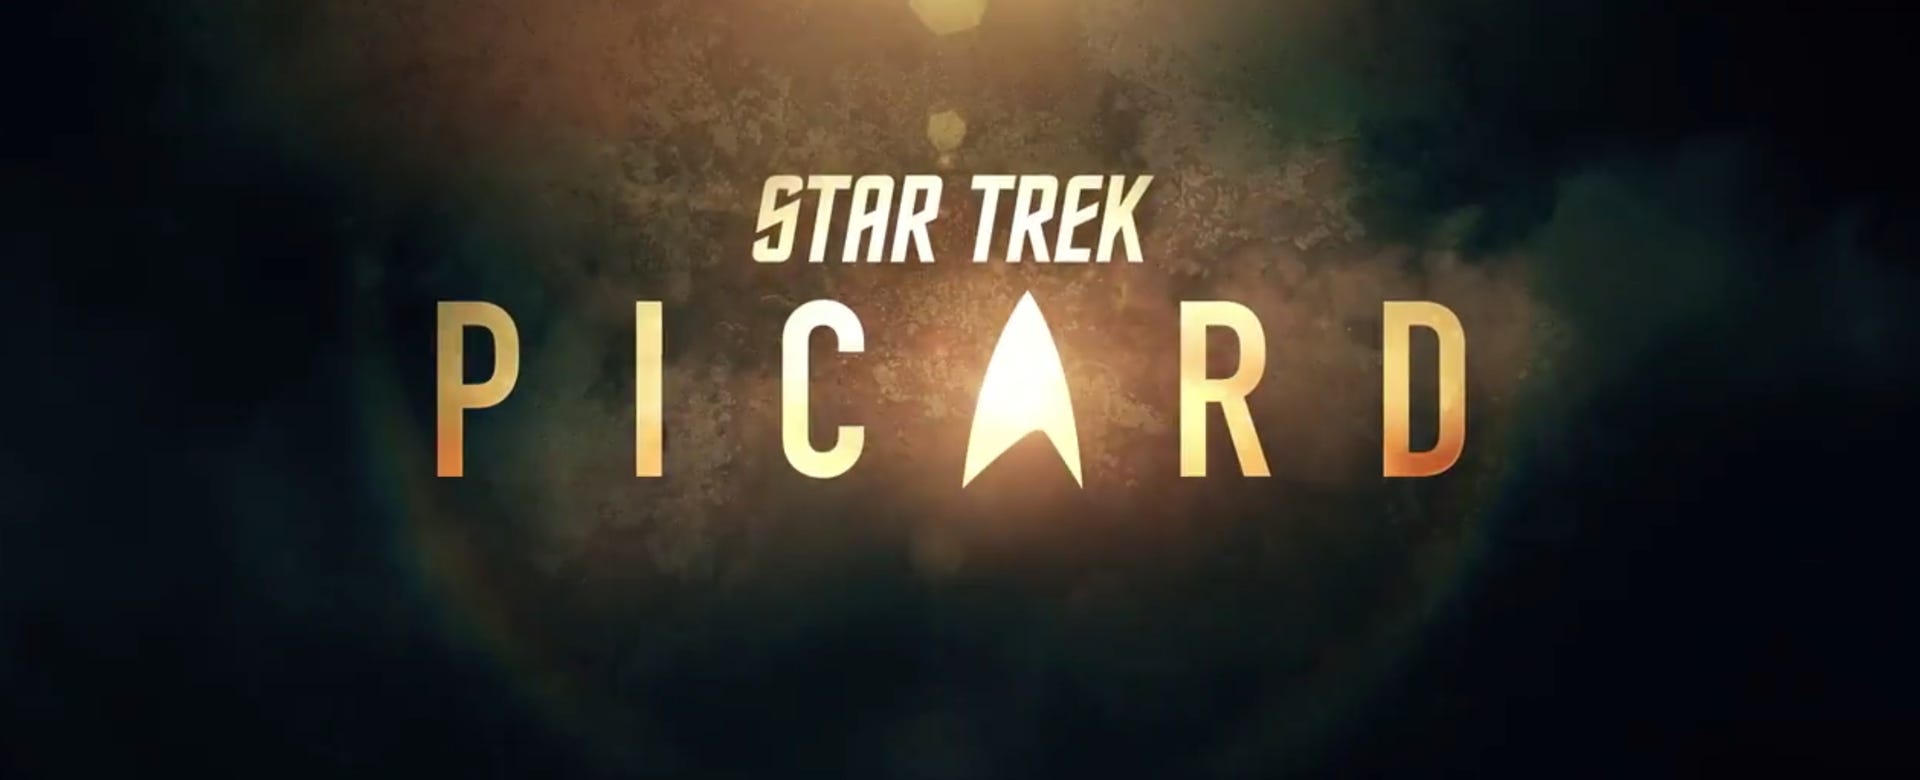 star-trek-picard-logo